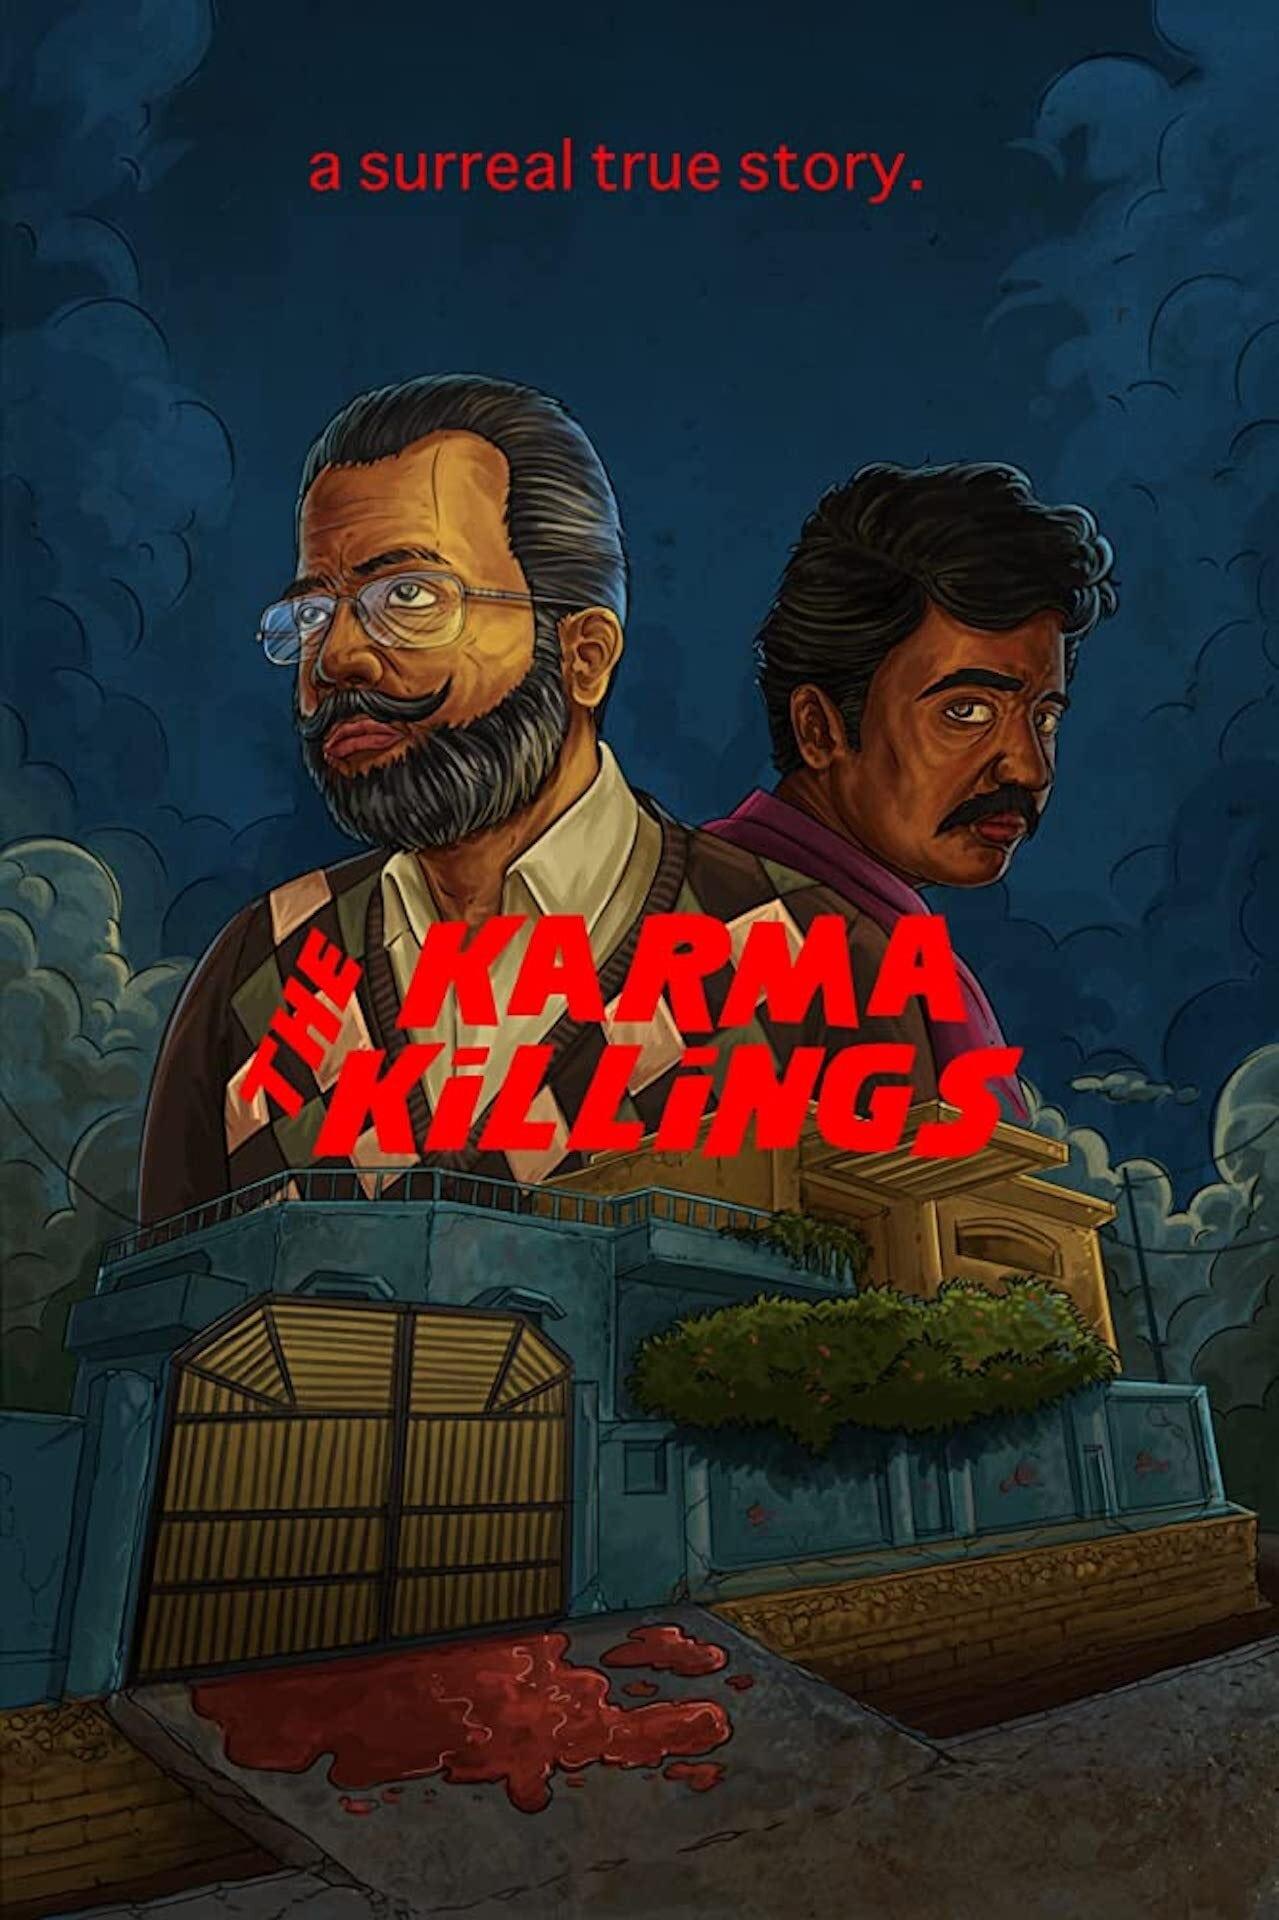 The Karma Killings poster